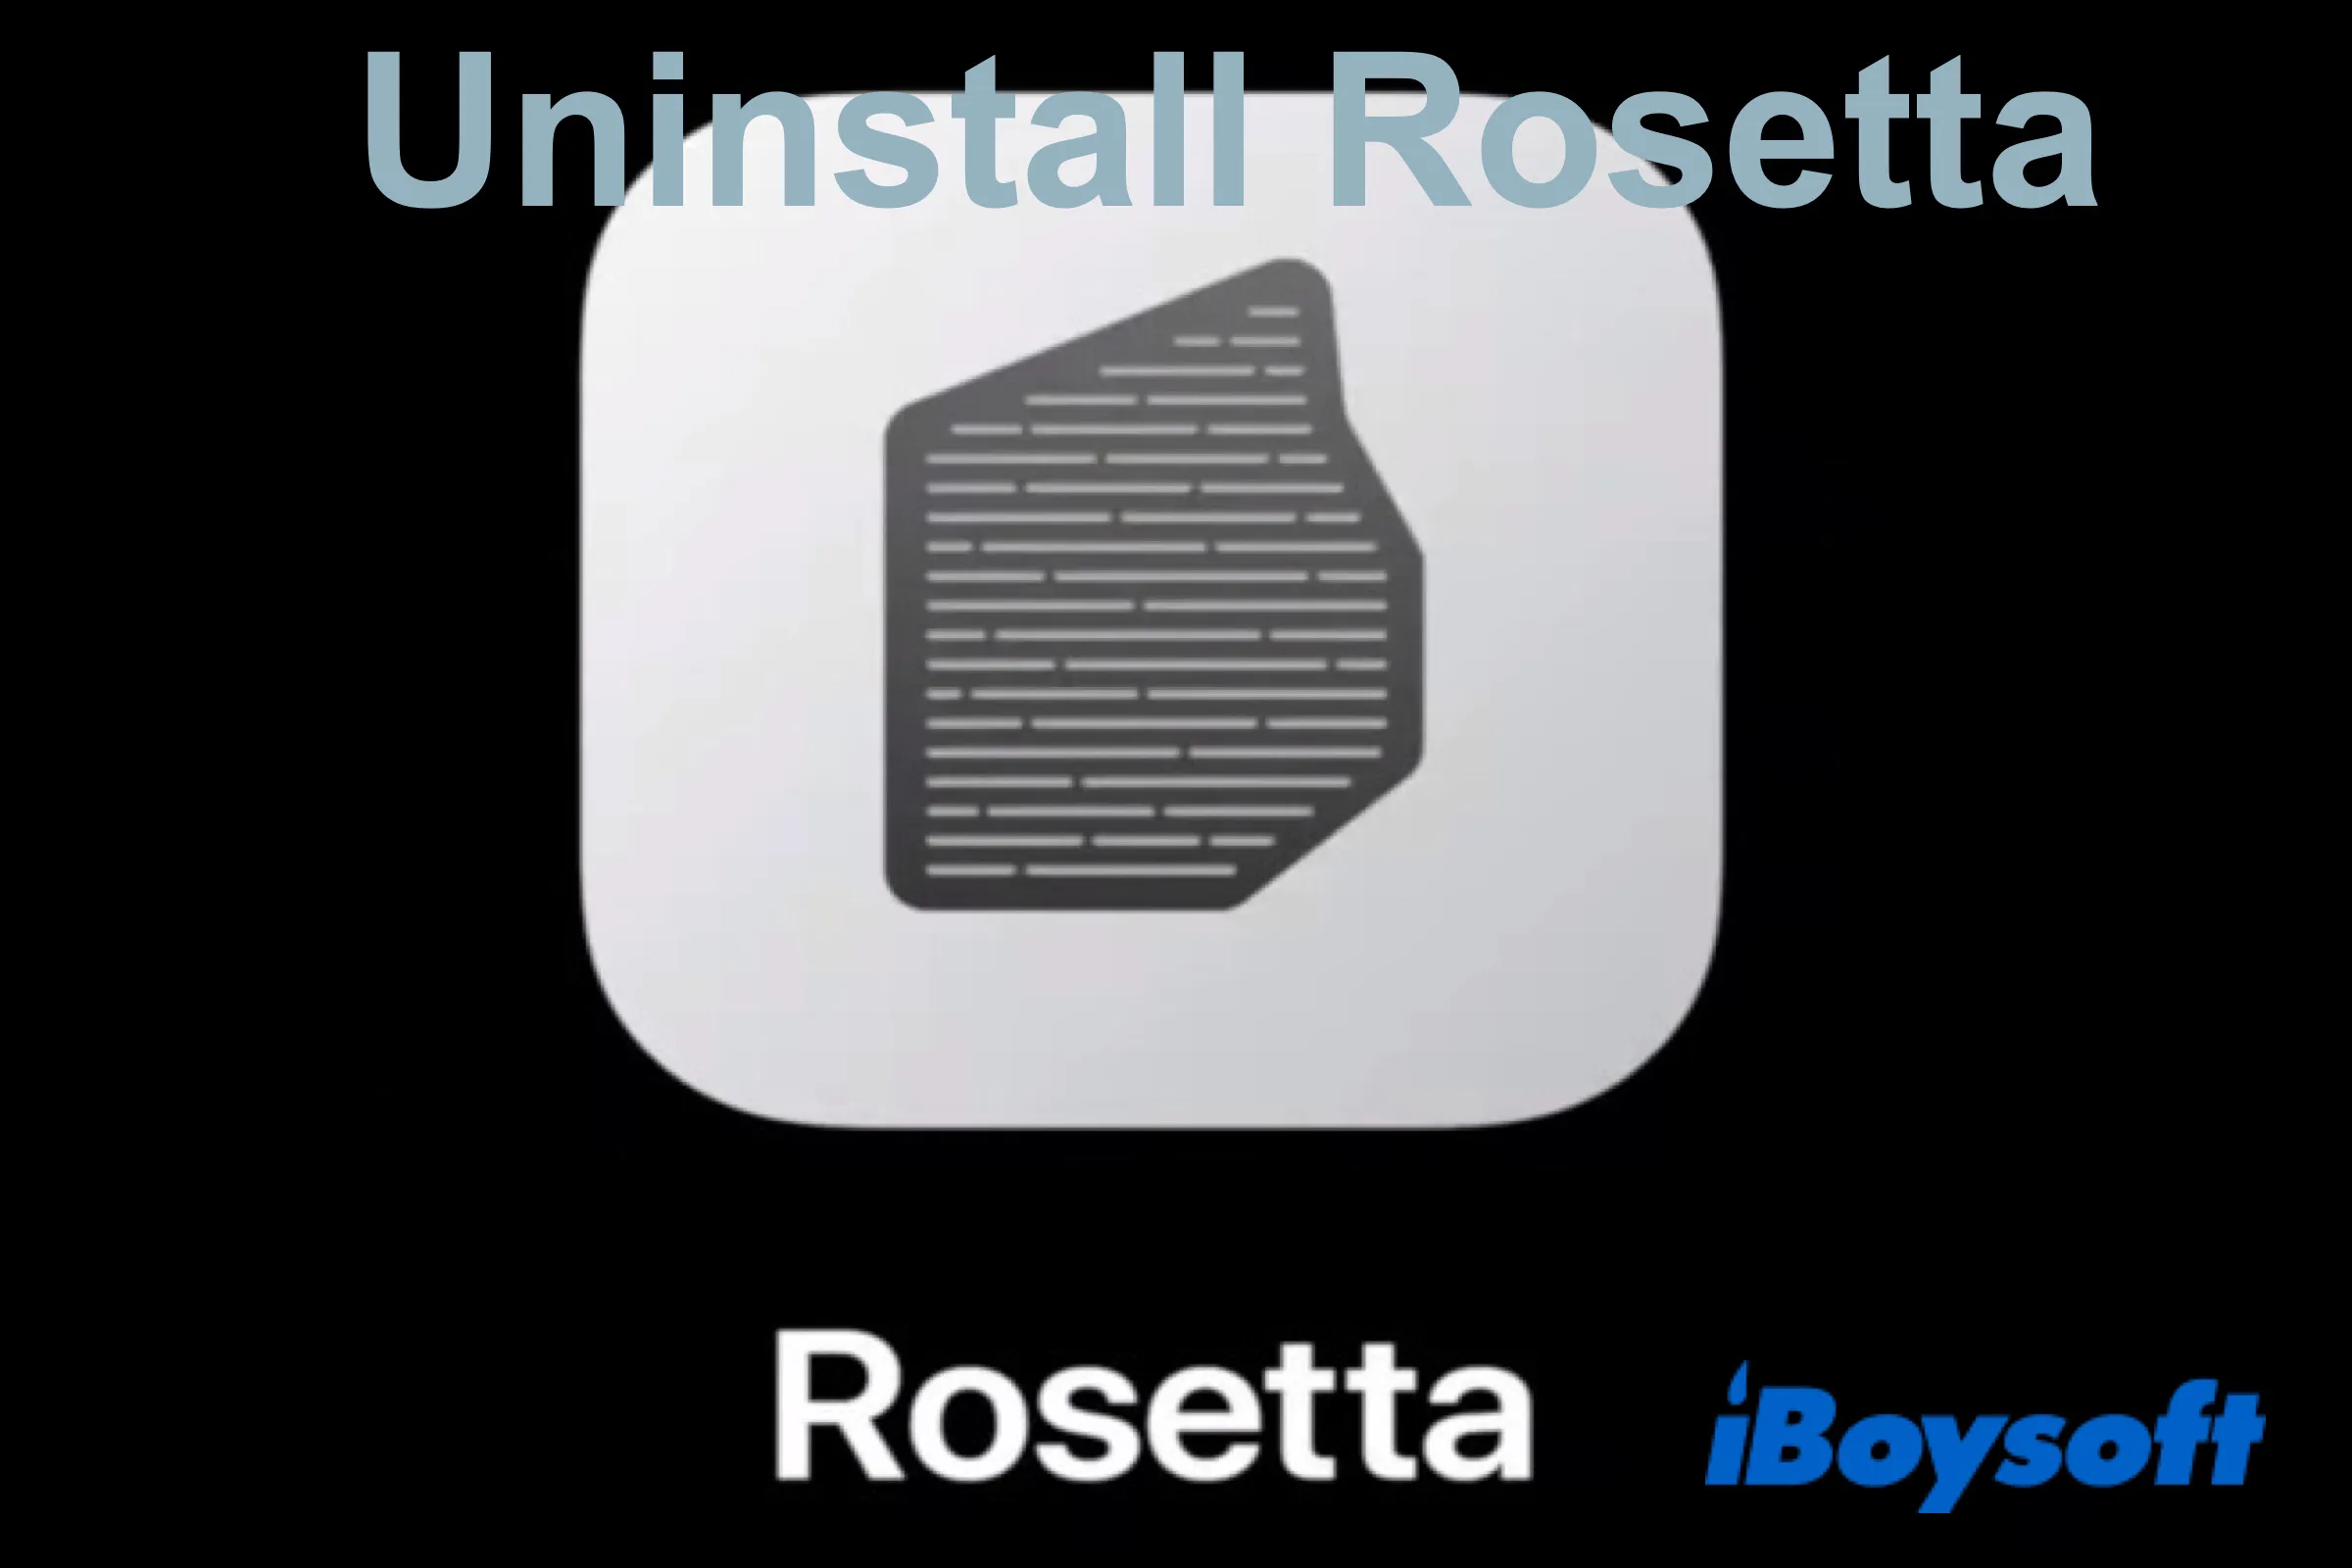 Unisntall Rosetta 2